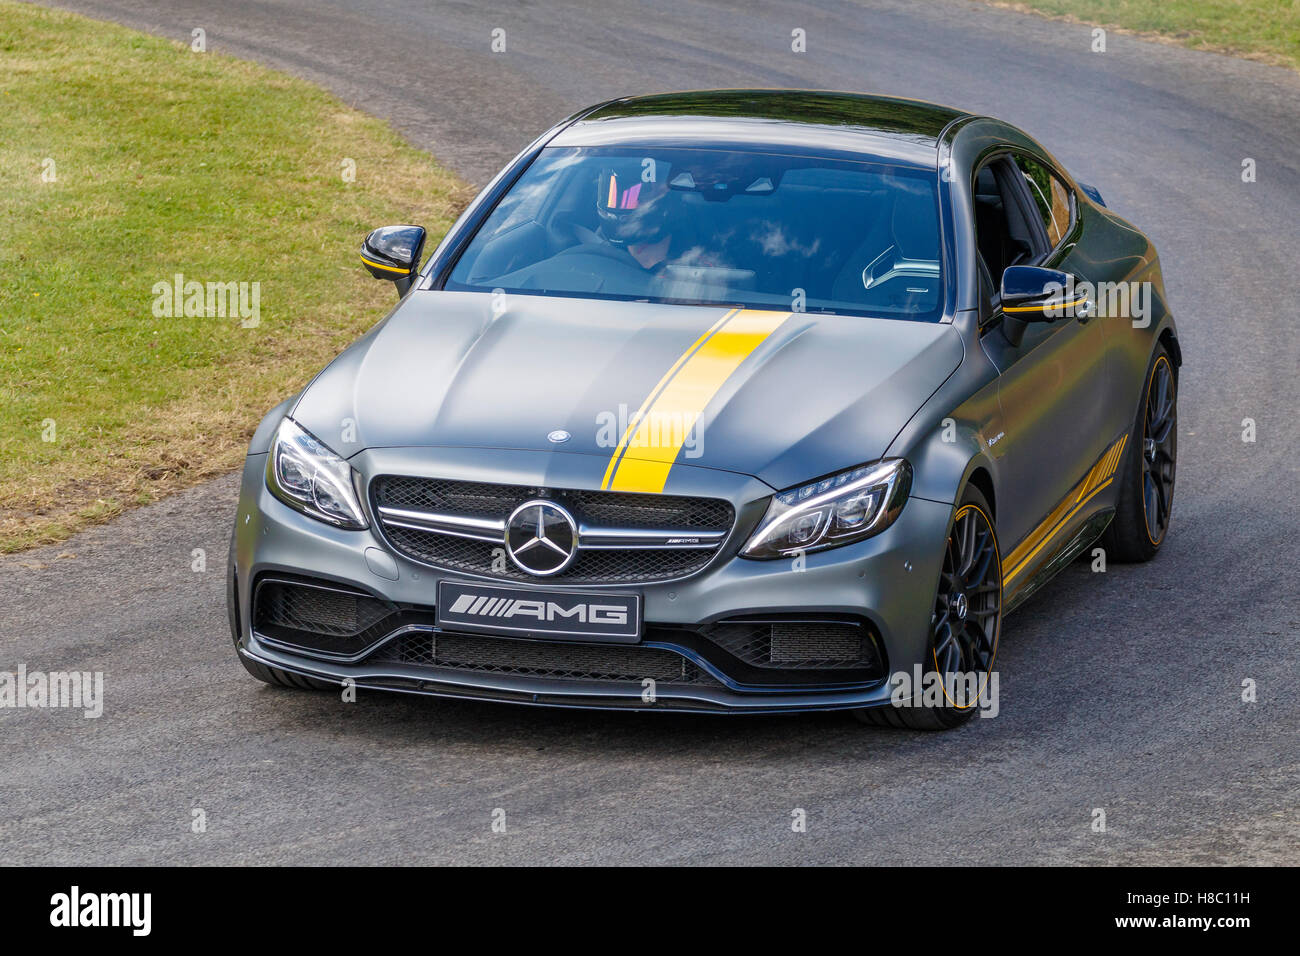 2016 Mercedes-AMG C63 Edition 1 auf 2016 Goodwood Festival of Speed,  Sussex, UK Stockfotografie - Alamy